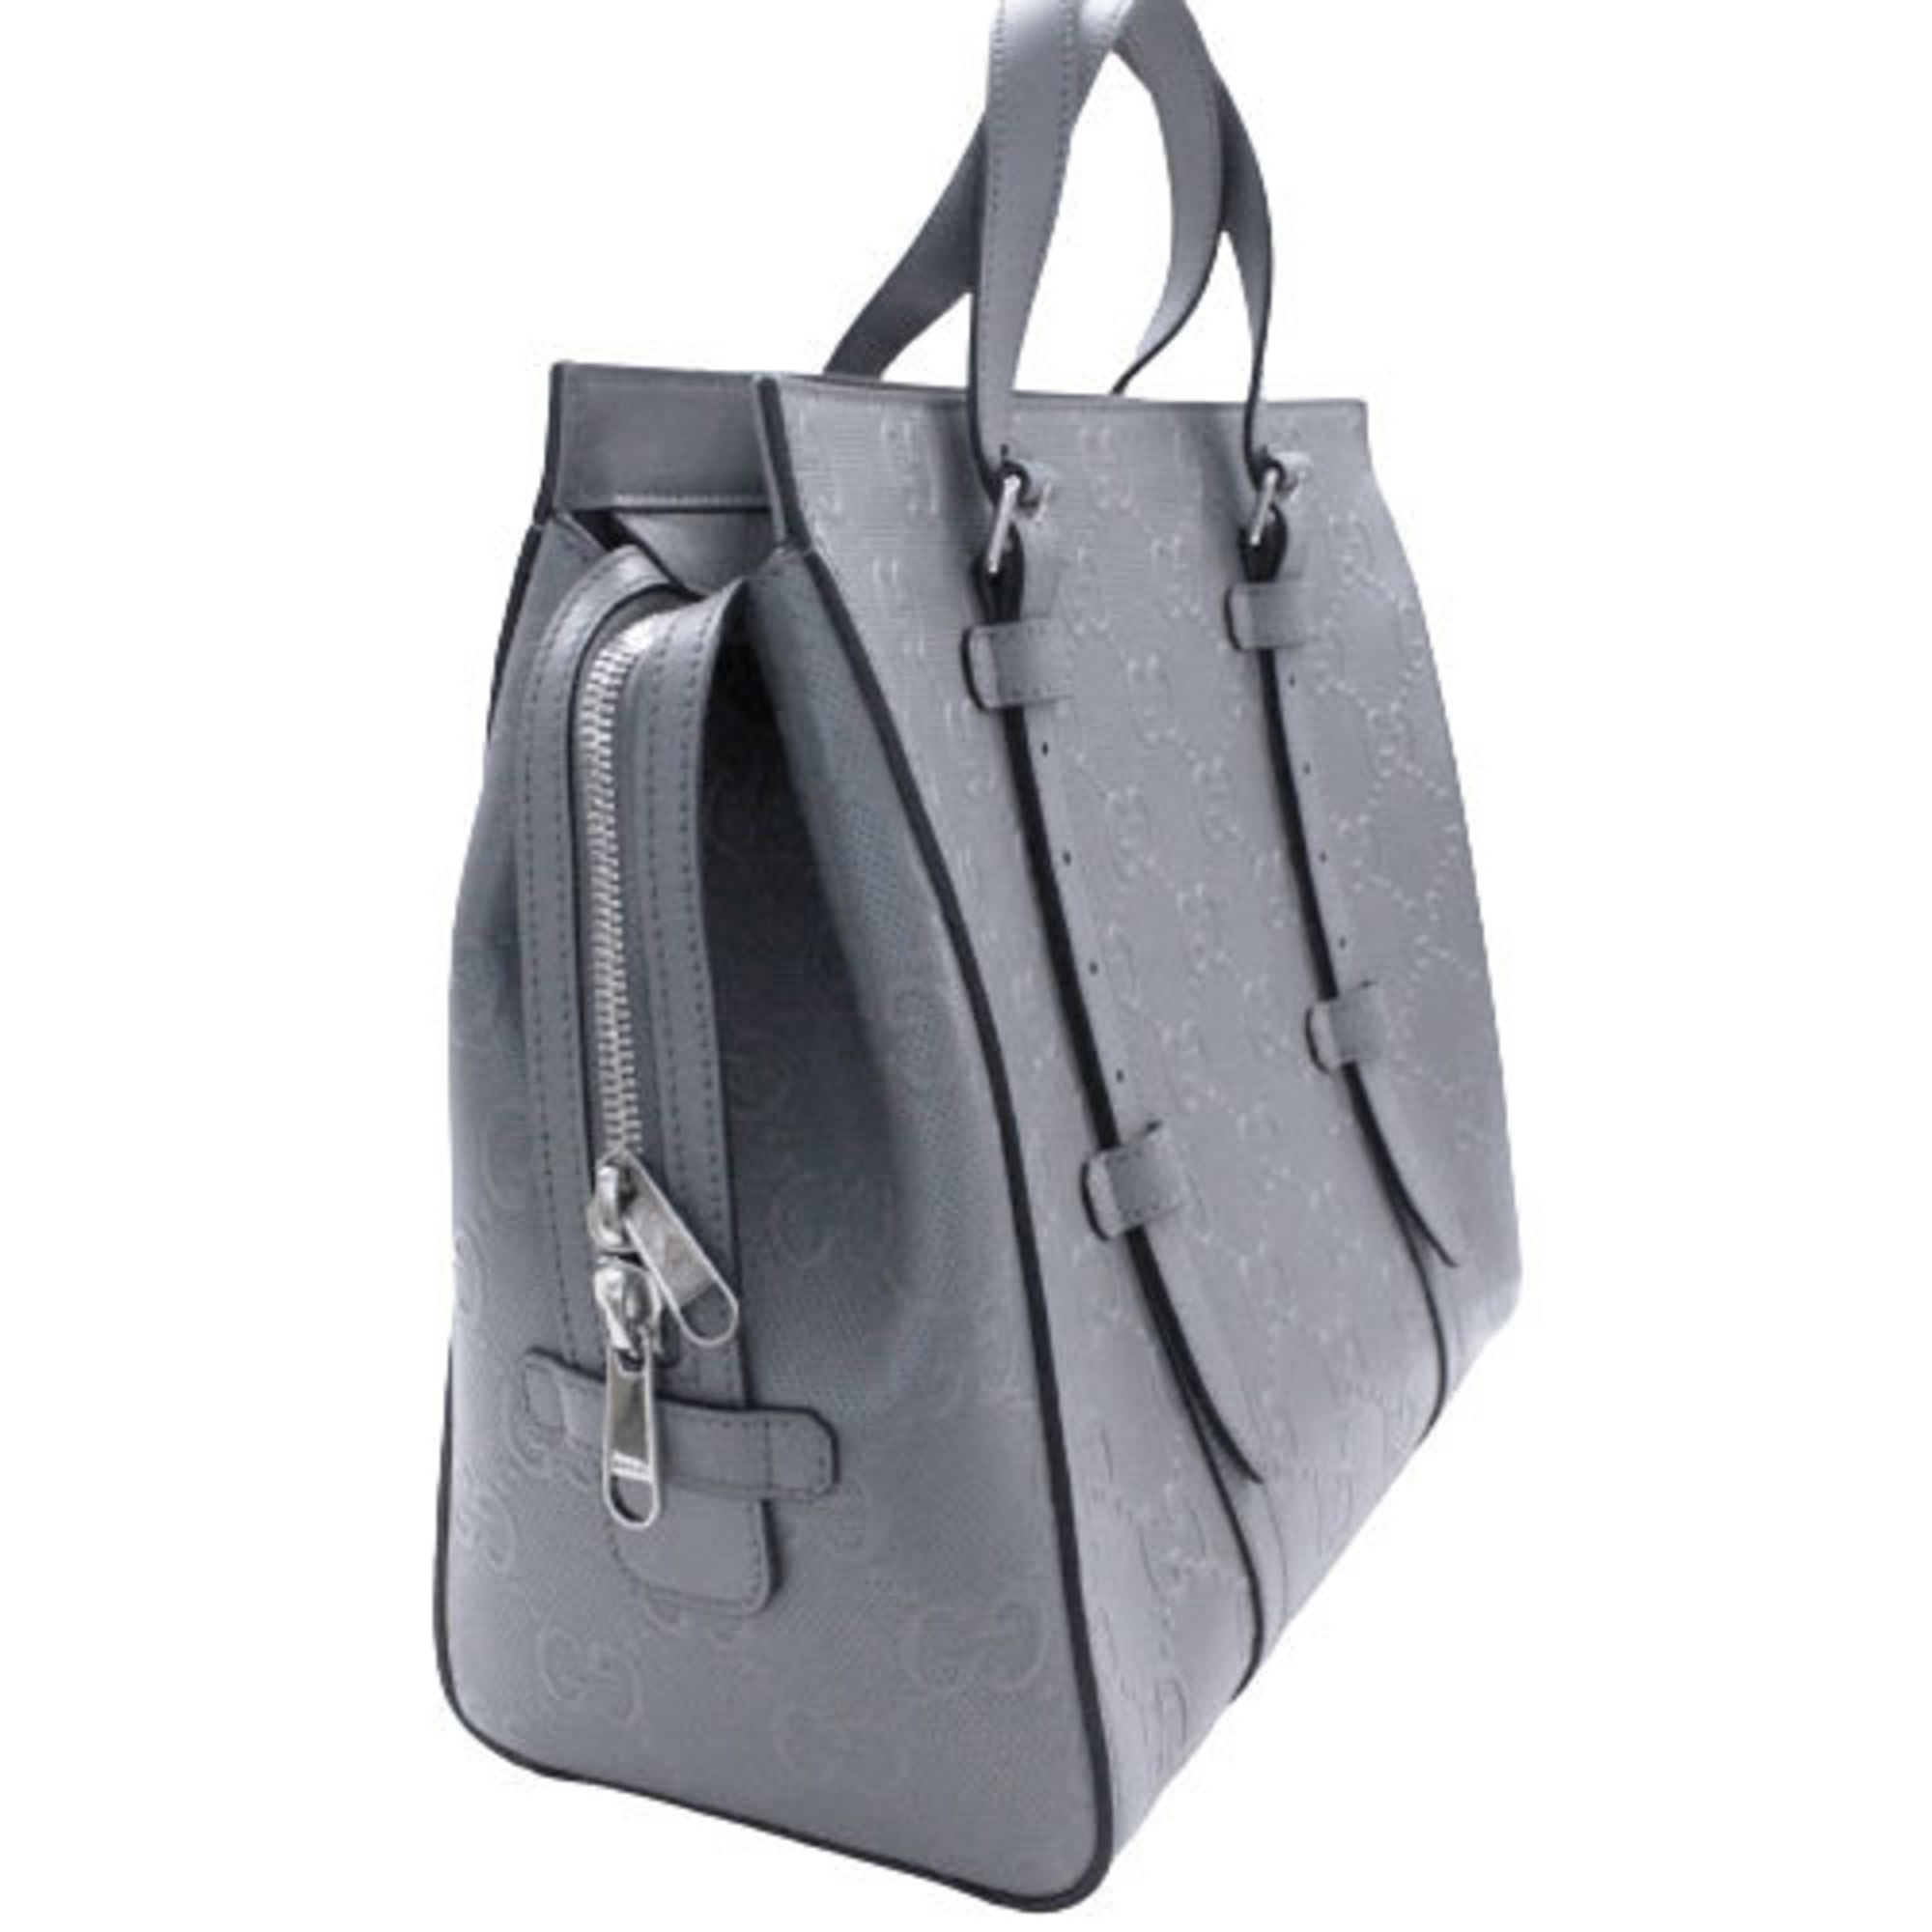 GUCCI bag ladies GG embossed tote handbag leather gray 625774